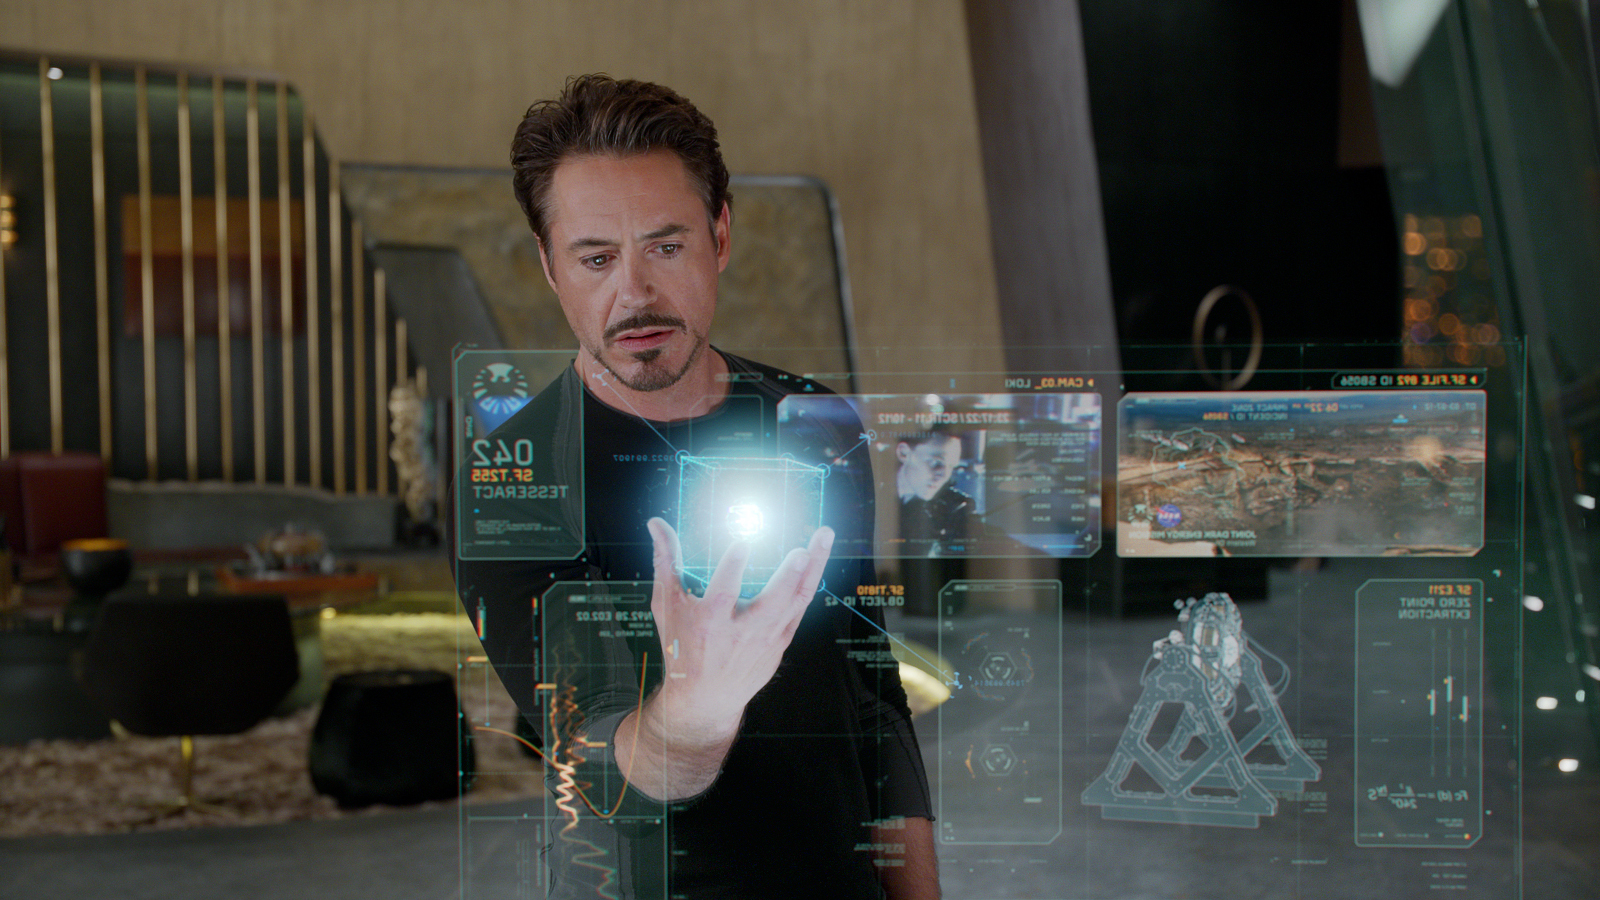 Iron man, robert downey jr, holographic computer, screenless display technology